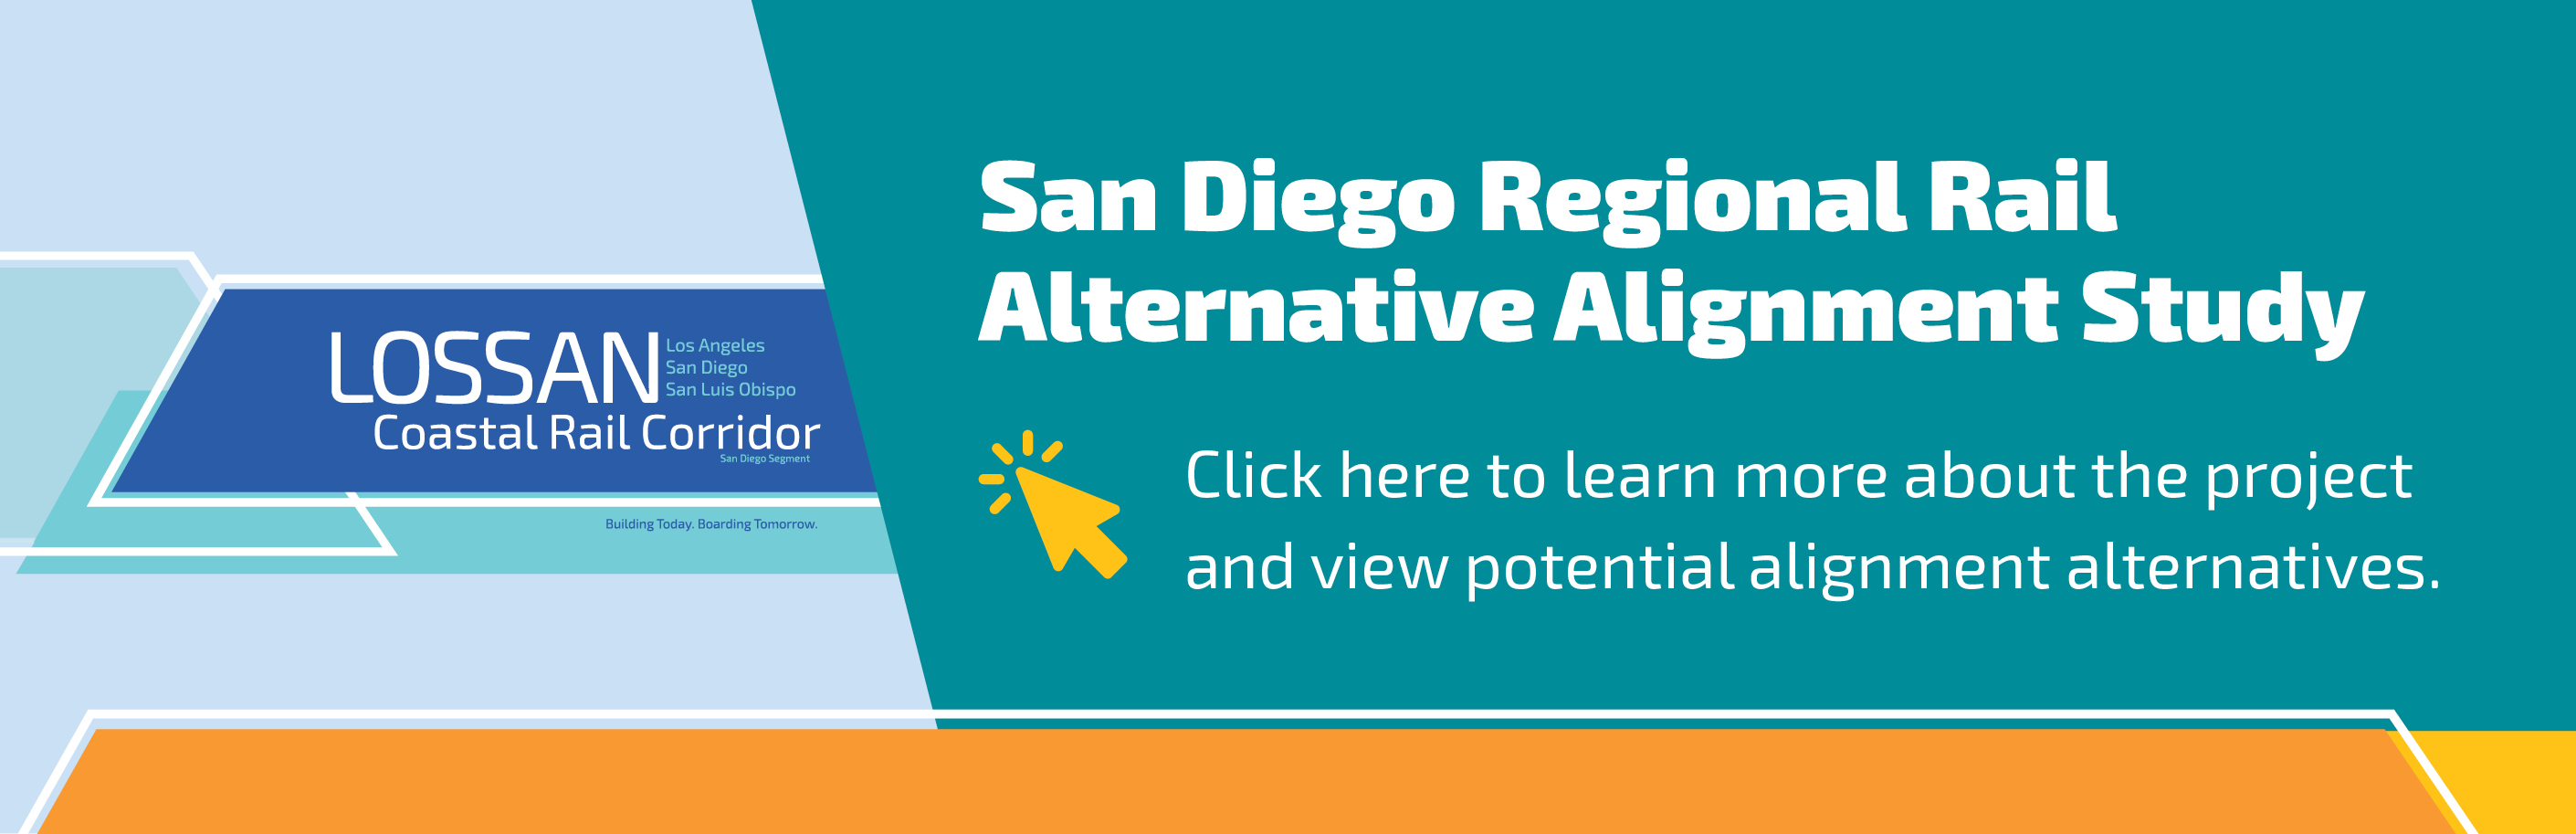 San Diego Regional Rail Alternative Alignment Study